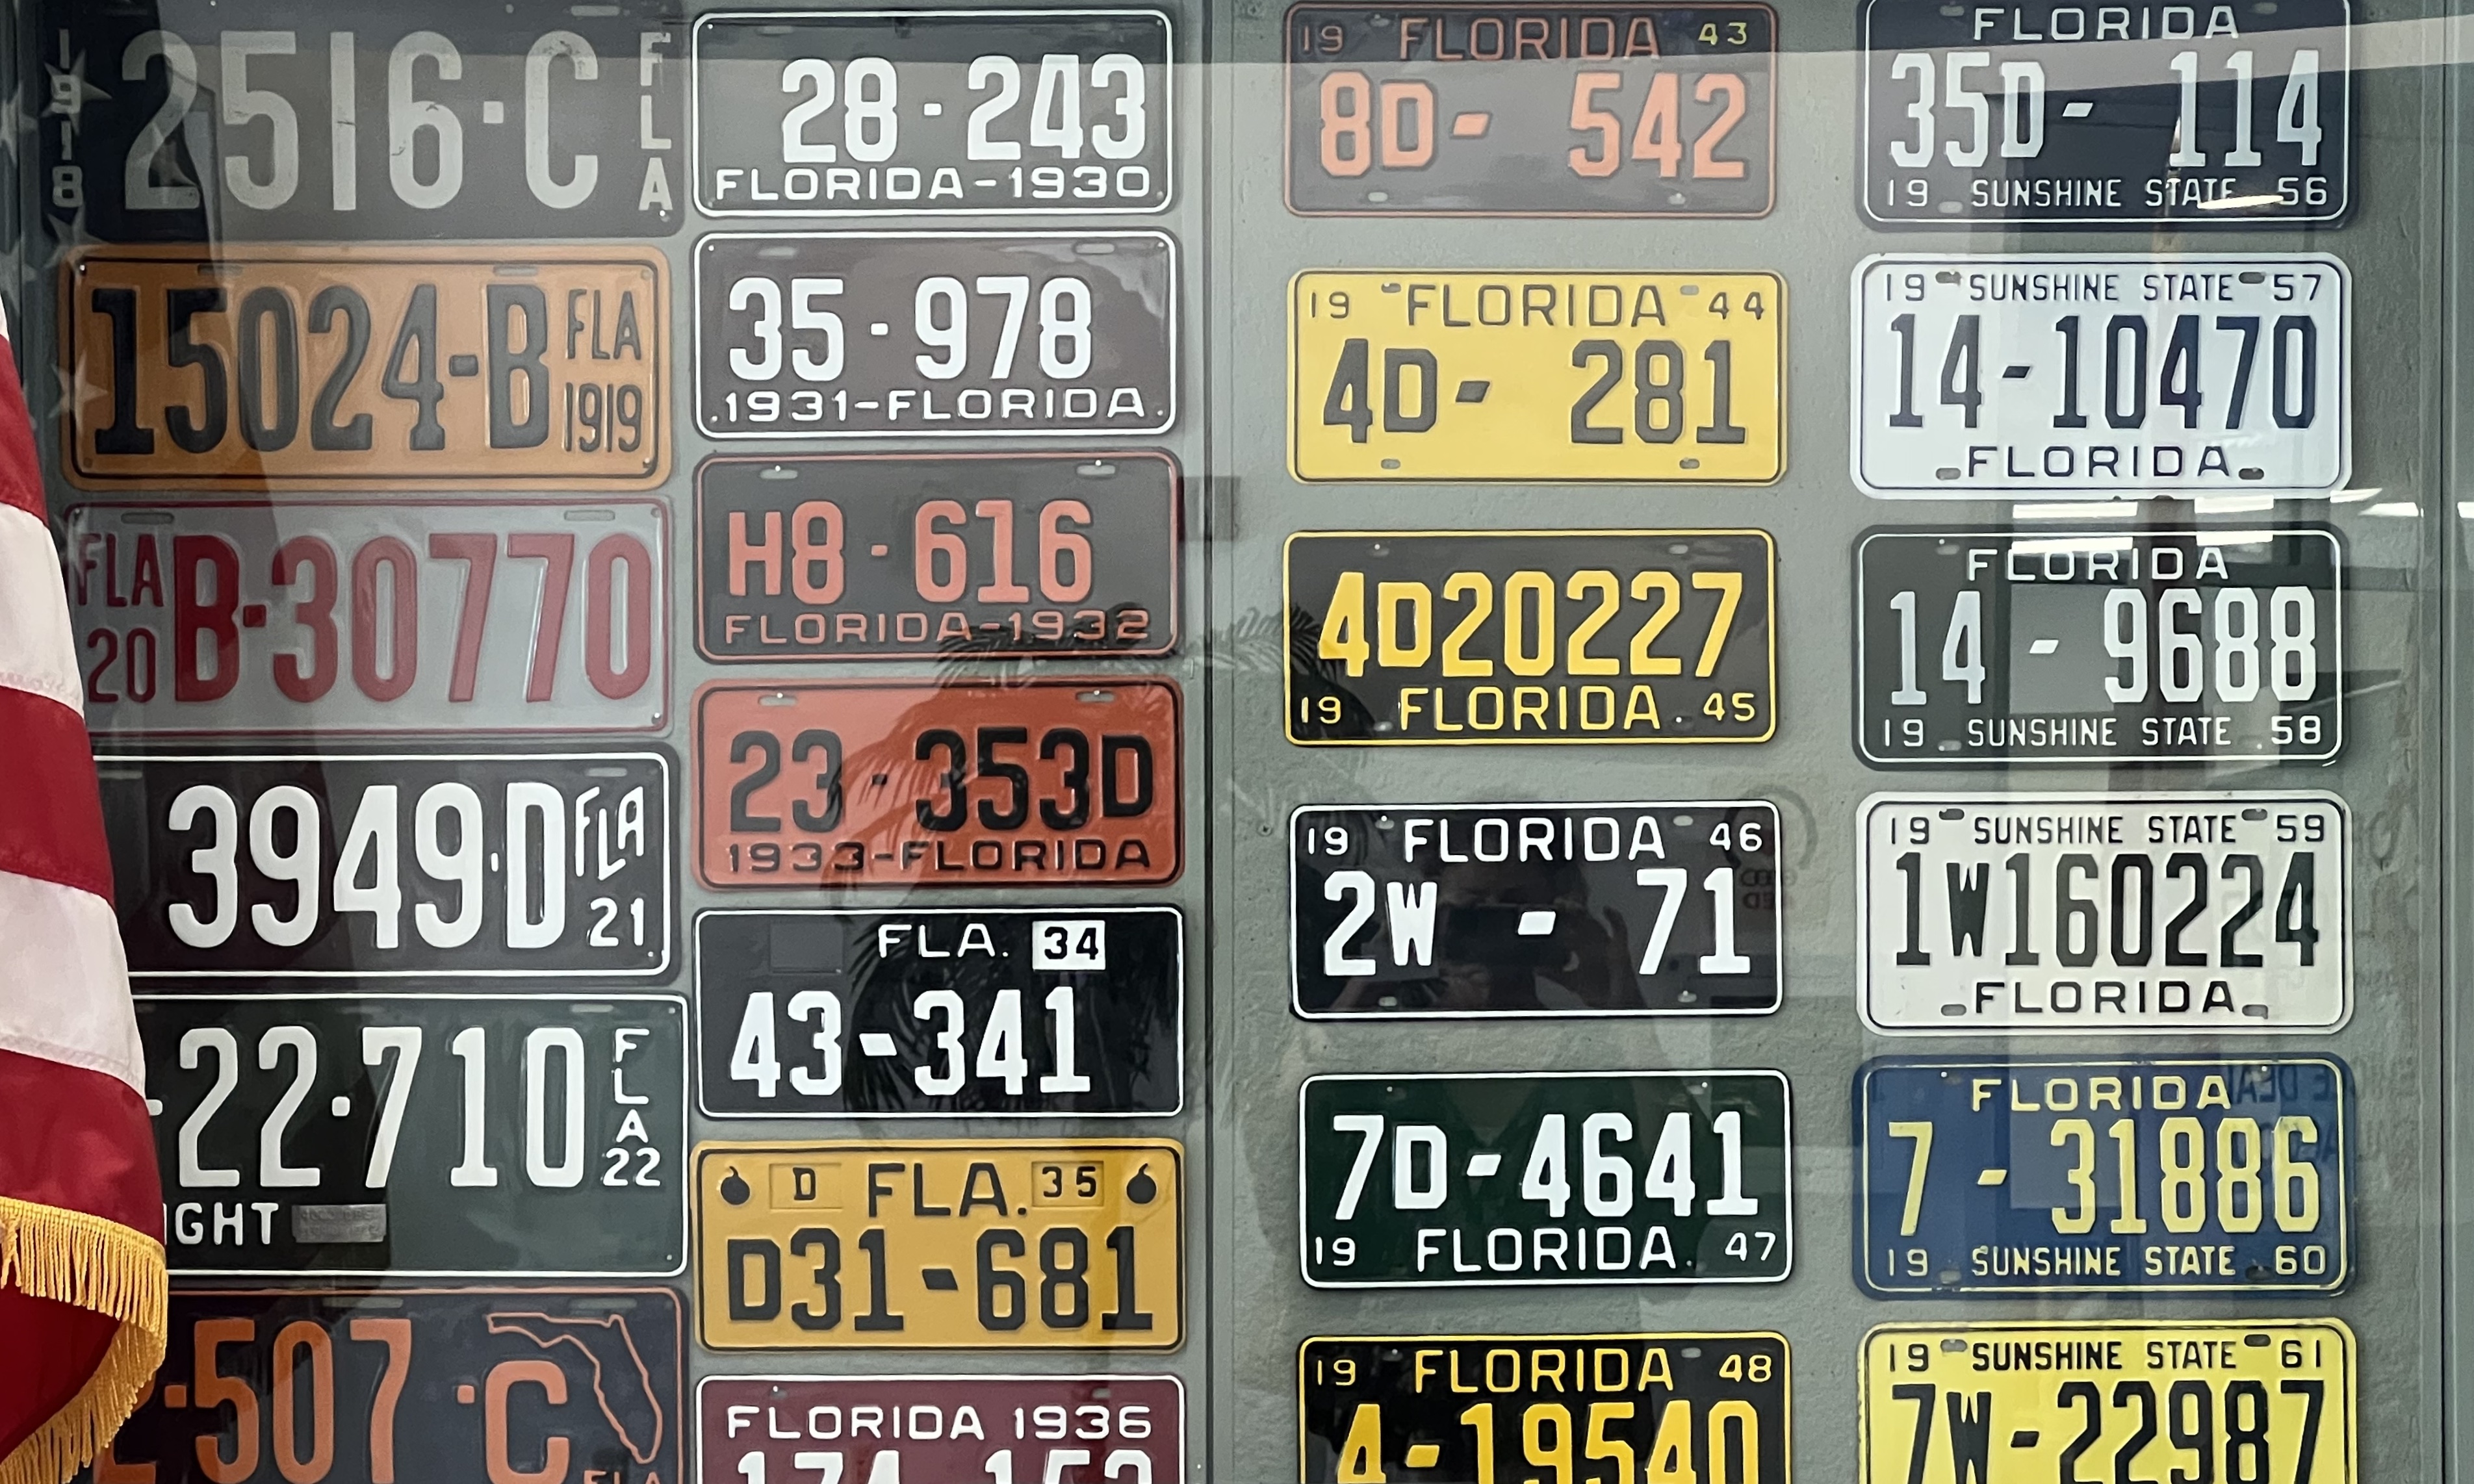 Vintage license plate display with American flag in left-hand corner